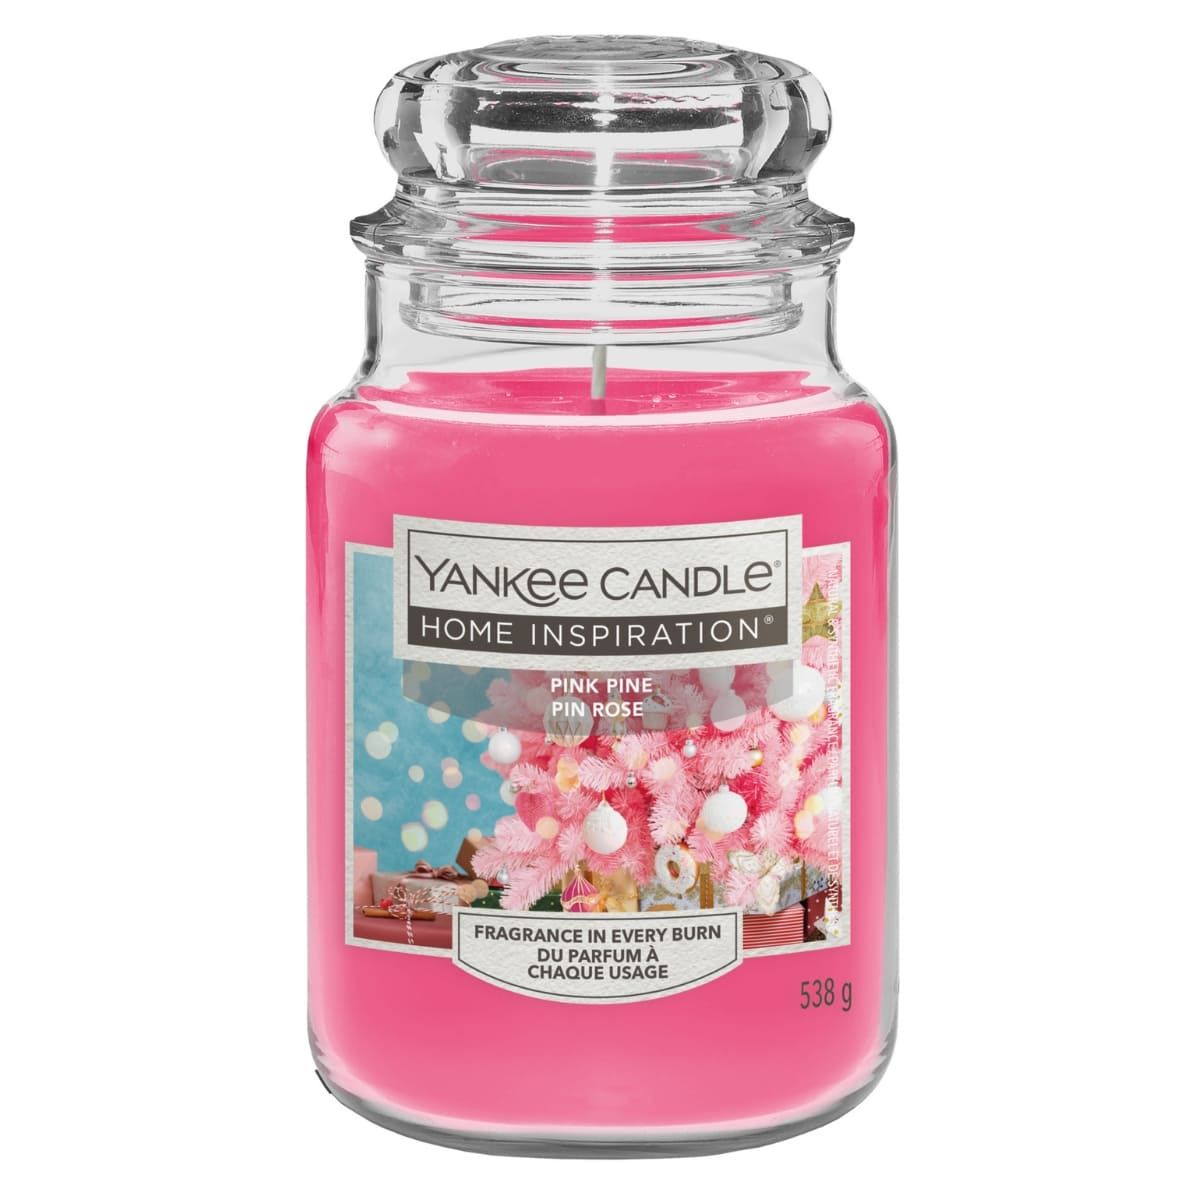 Ароматическая Свеча Yankee Candle Home Inspiration Pink Pine, 538 гр yankee candle home inspiration ароматическая свеча утреннее блаженство 538 г